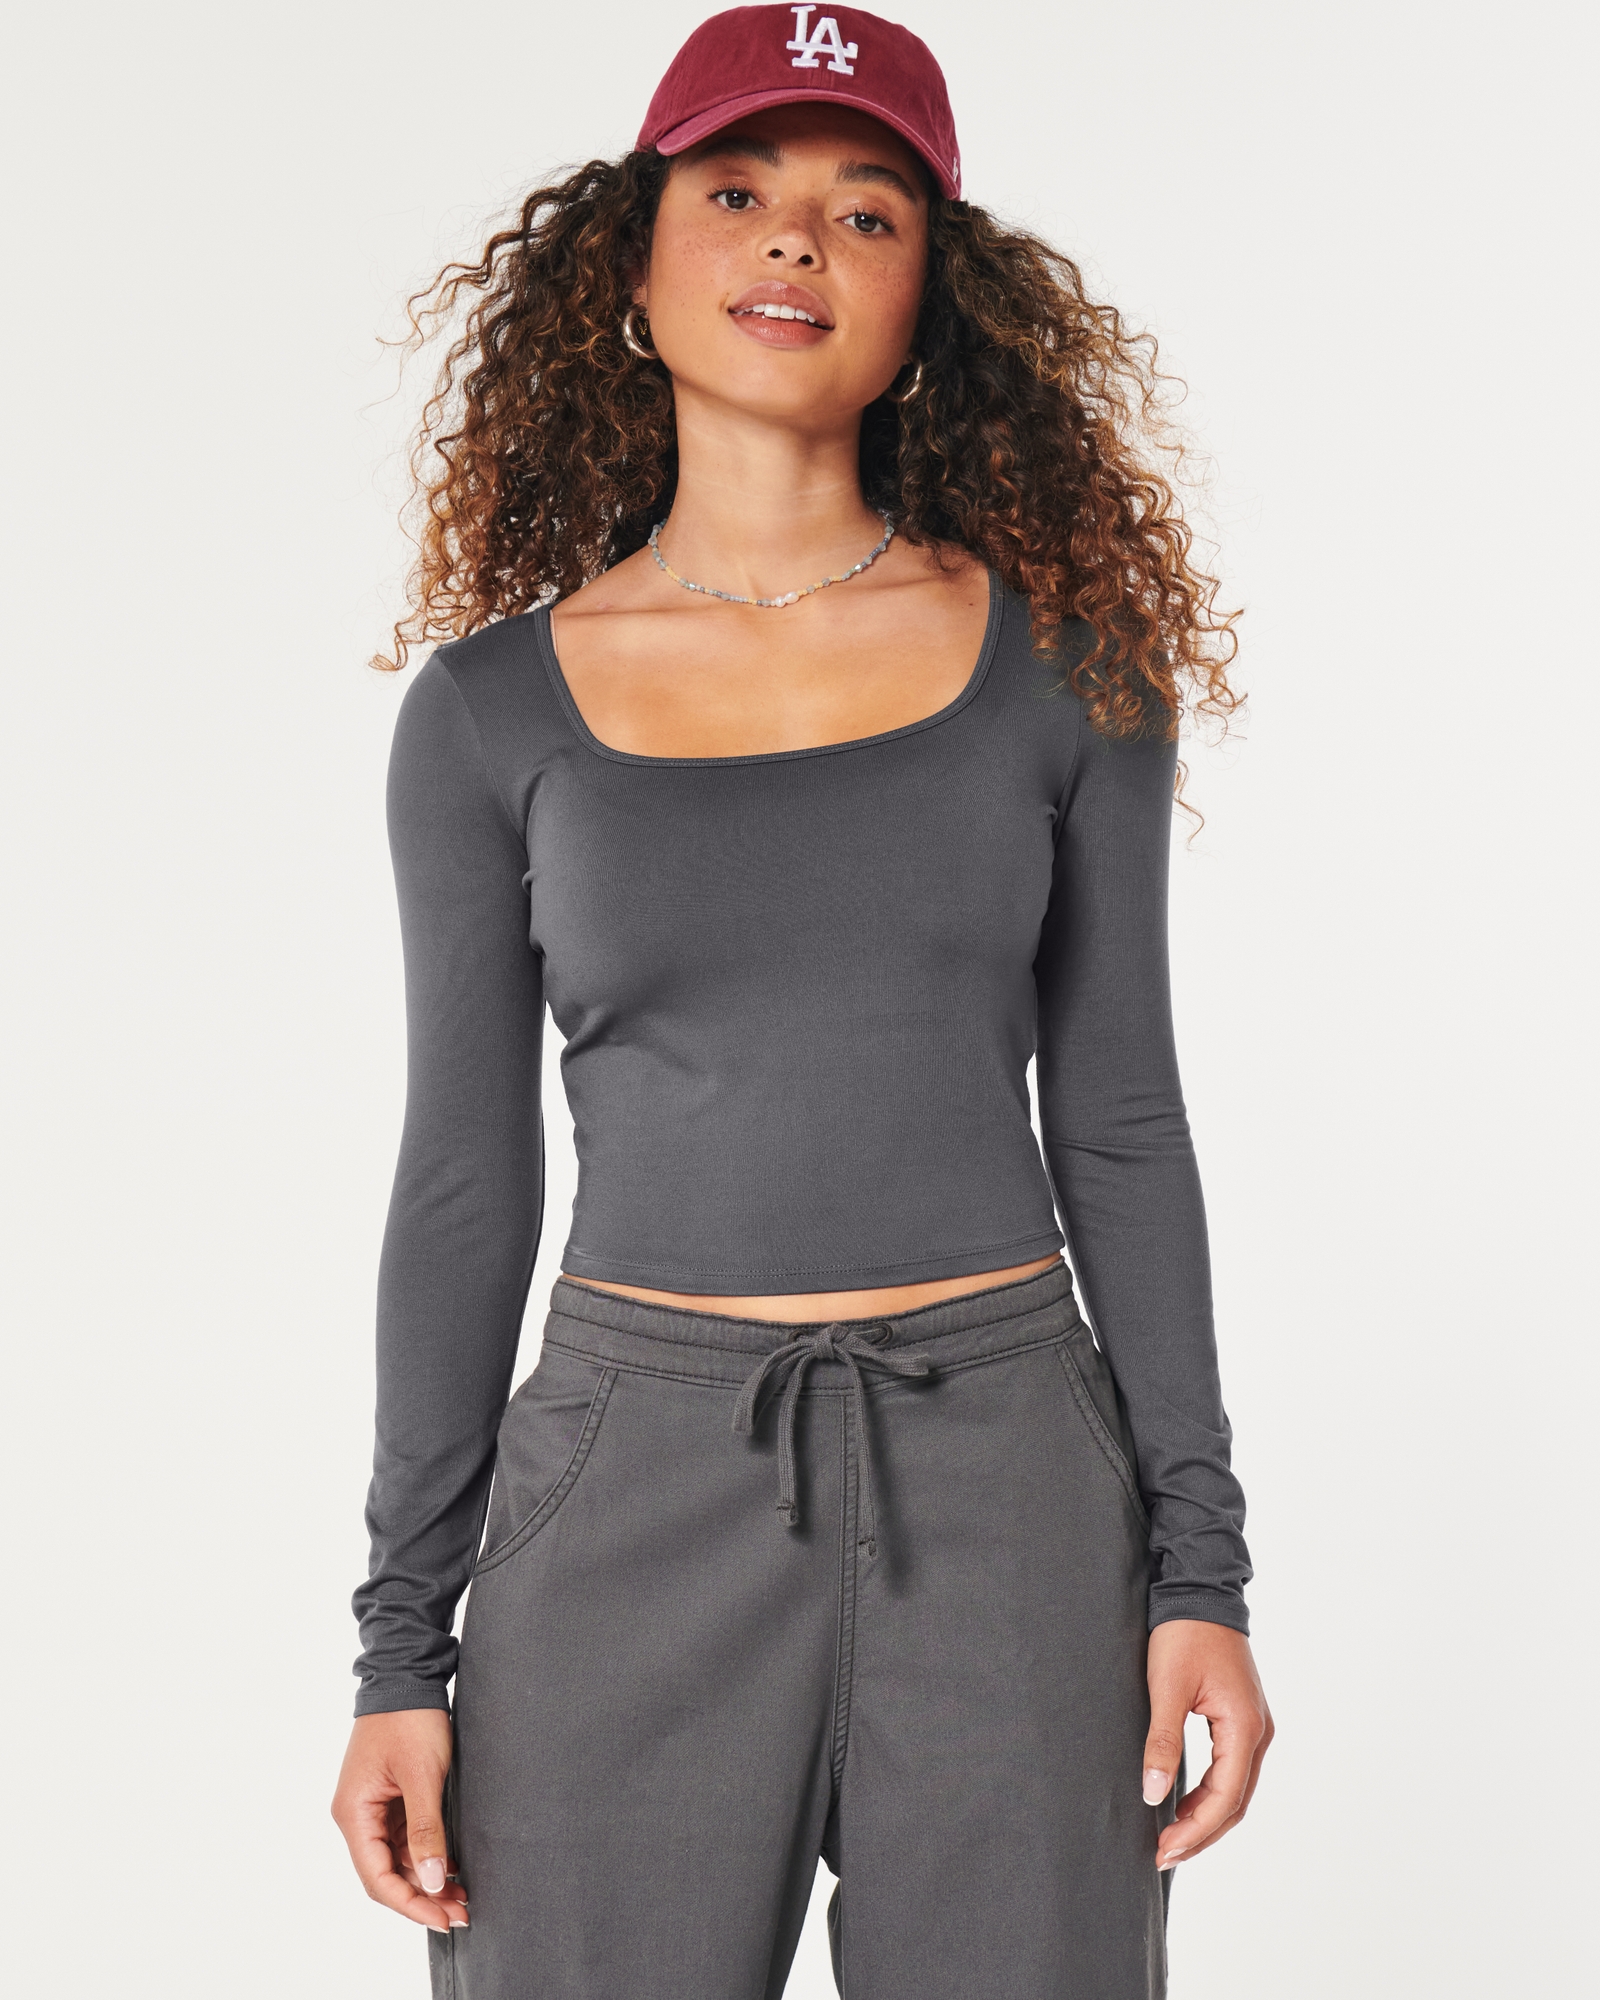 Women's Cotton Seamless Fabric Squareneck Bodysuit, Women's Tops